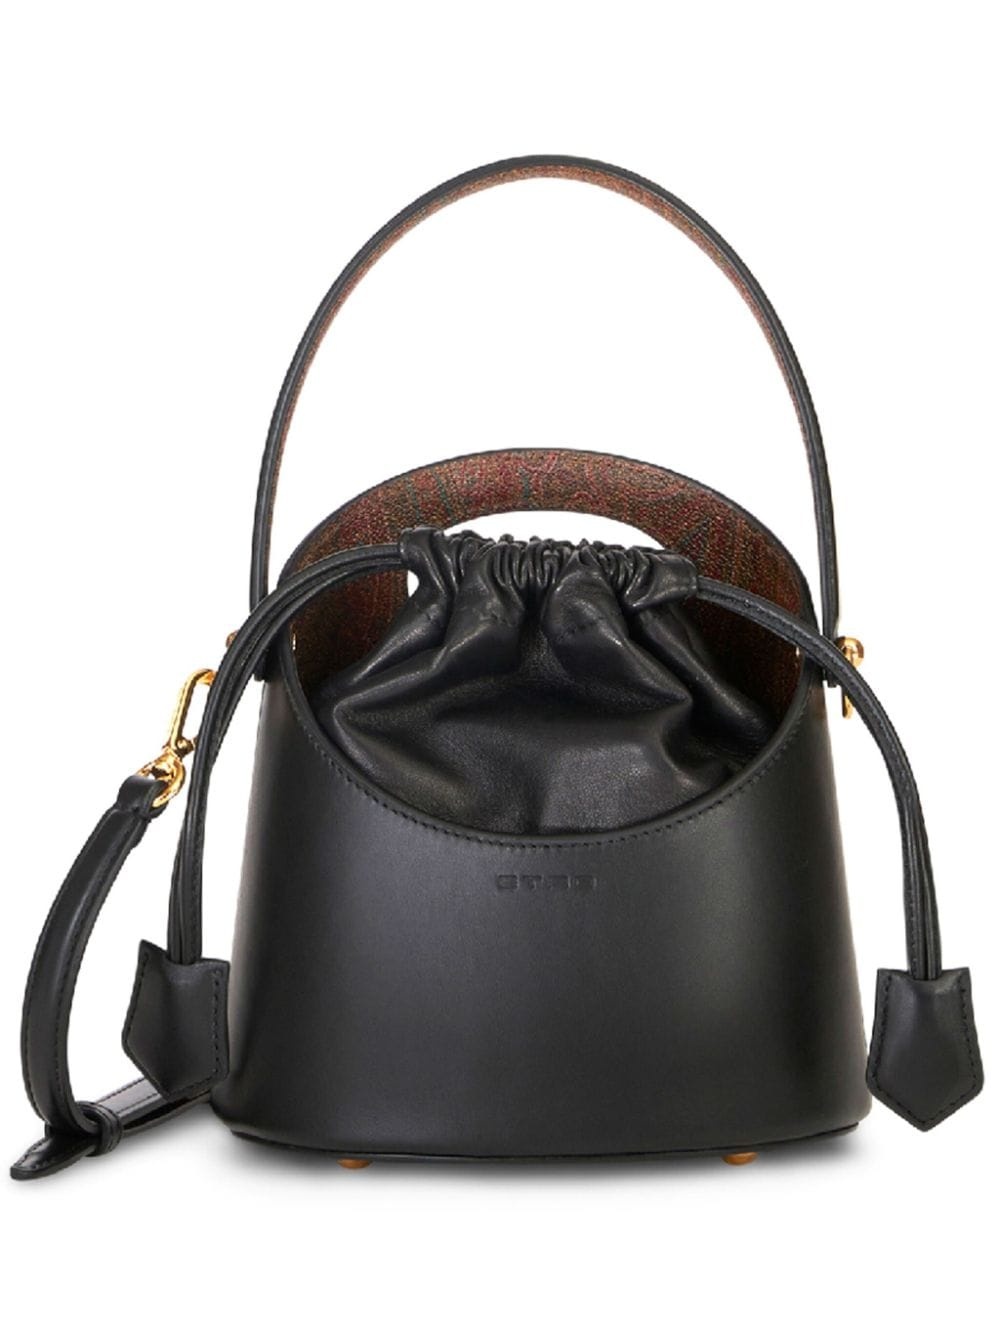 Saturno leather bucket bag - 1